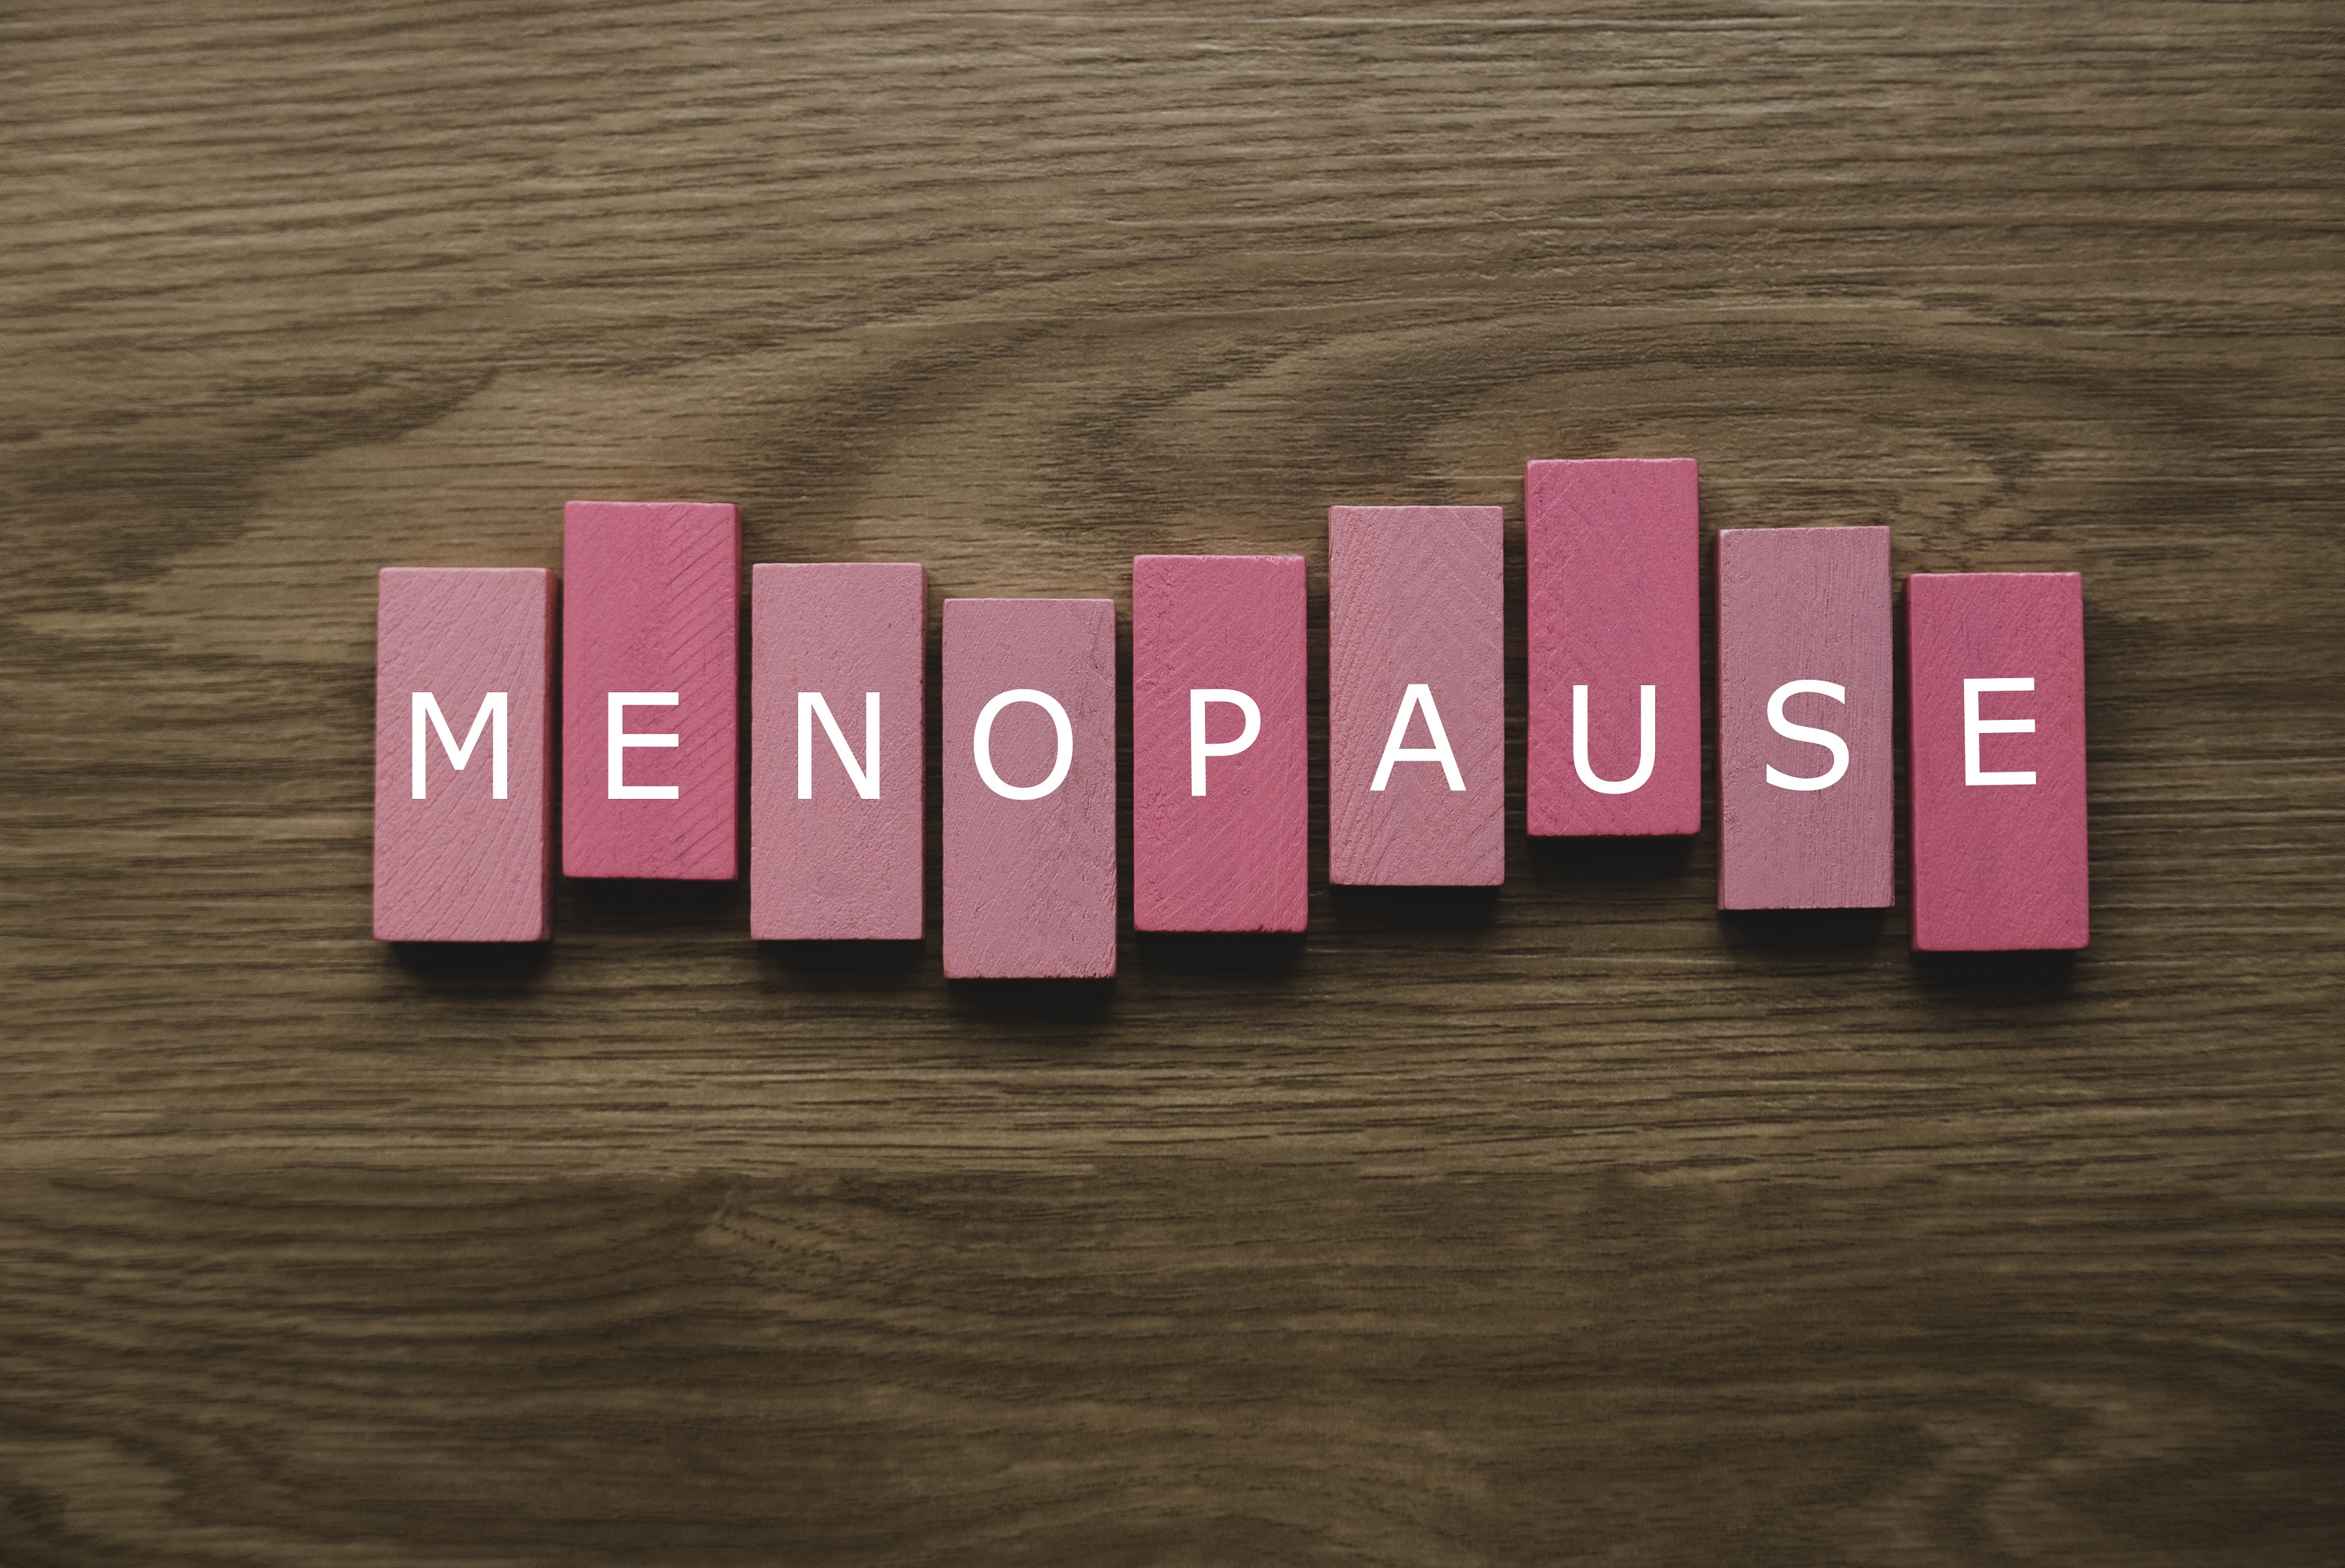 tiles spelling Menopause